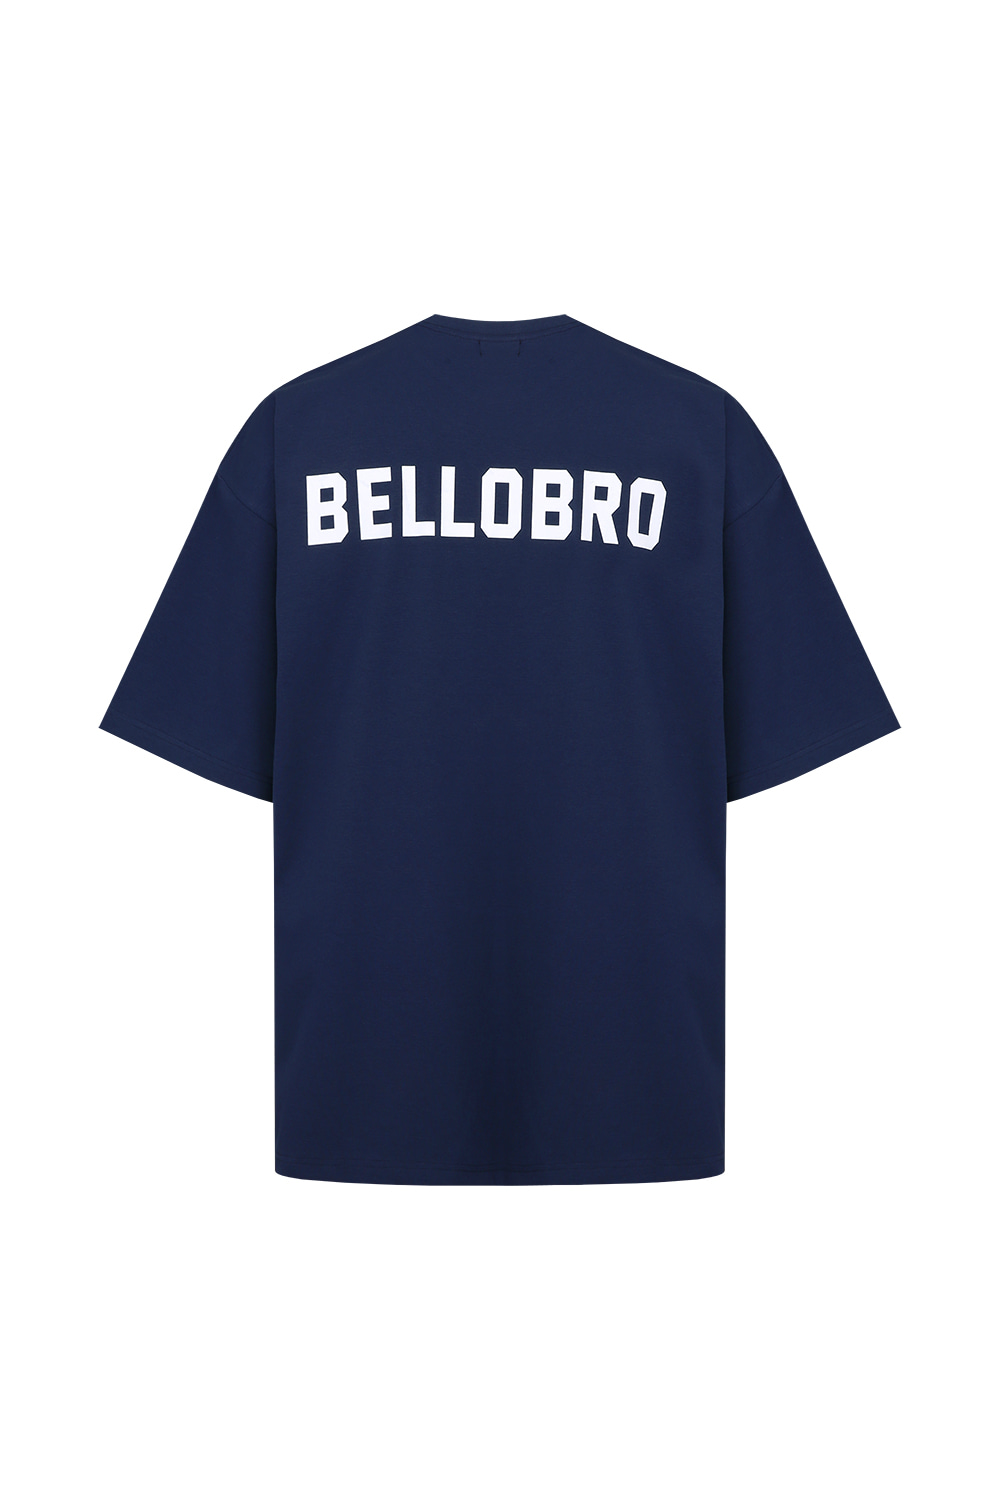 BELLOBRO T-Shirts (07)